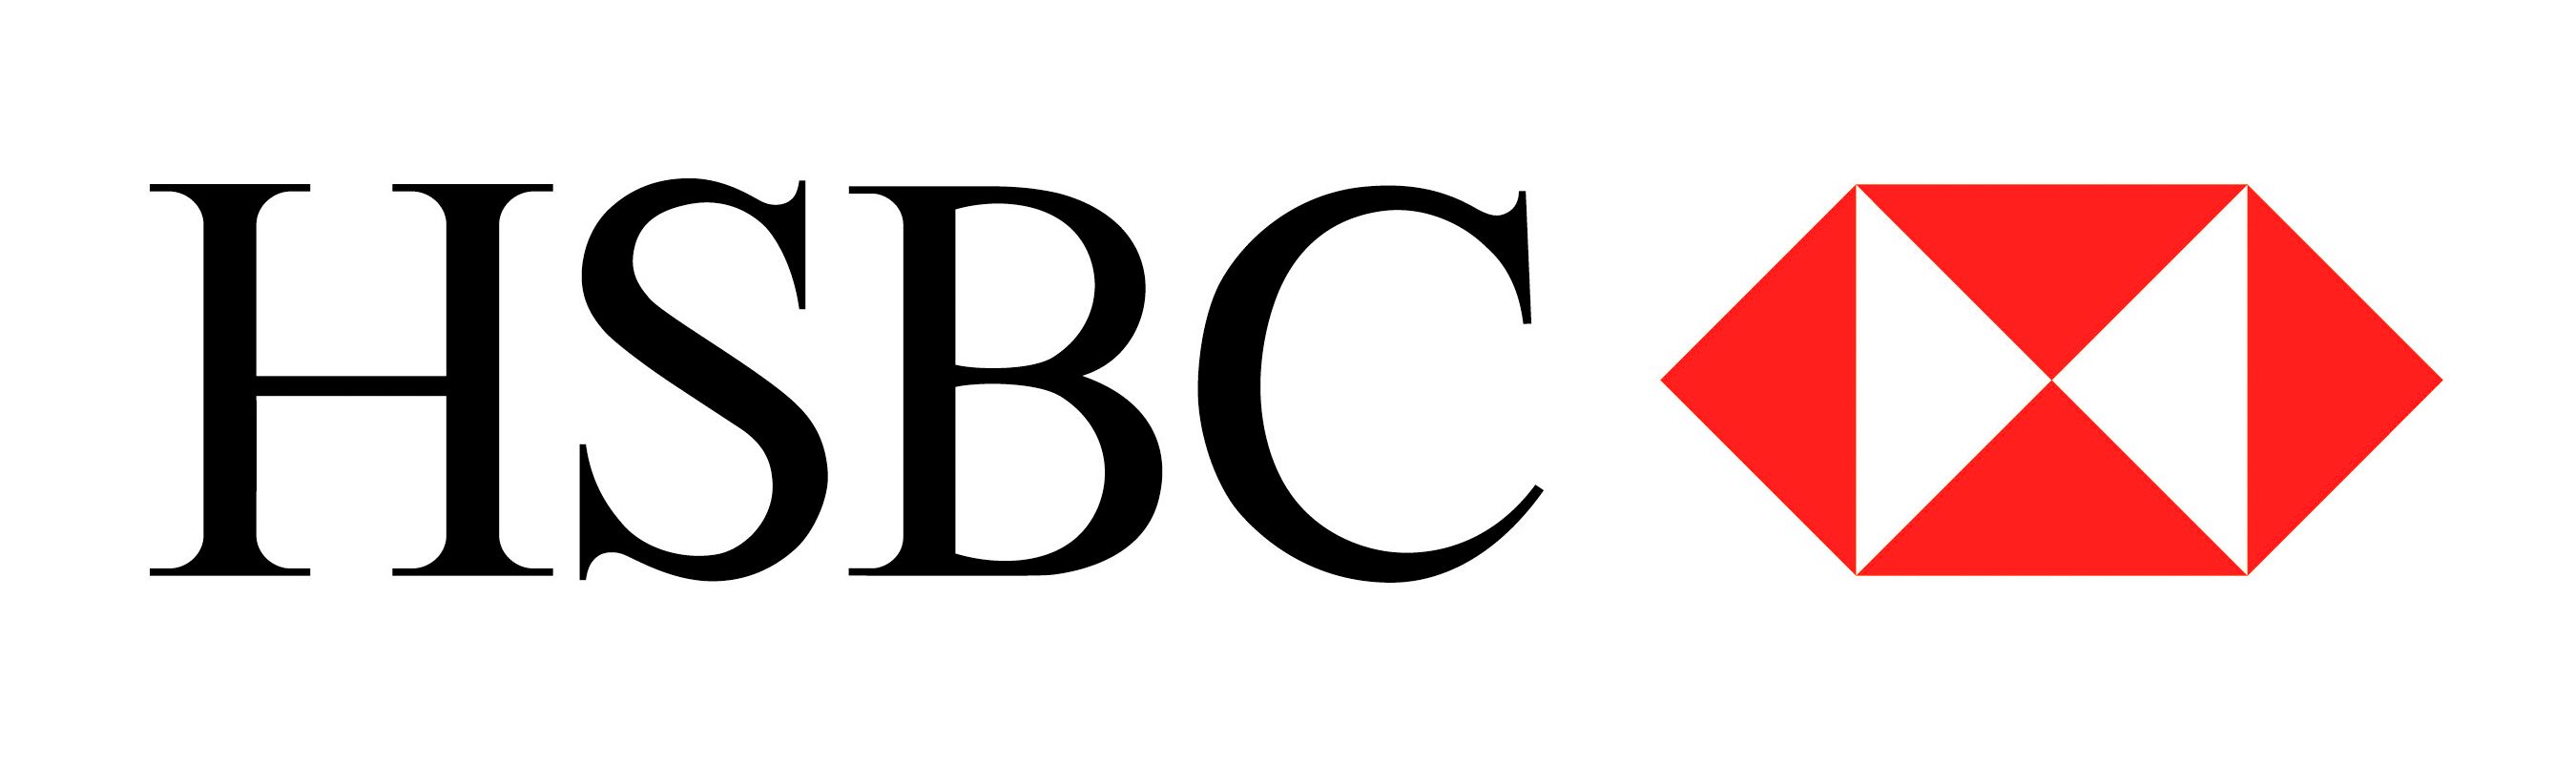 HSBC-symbol.jpg